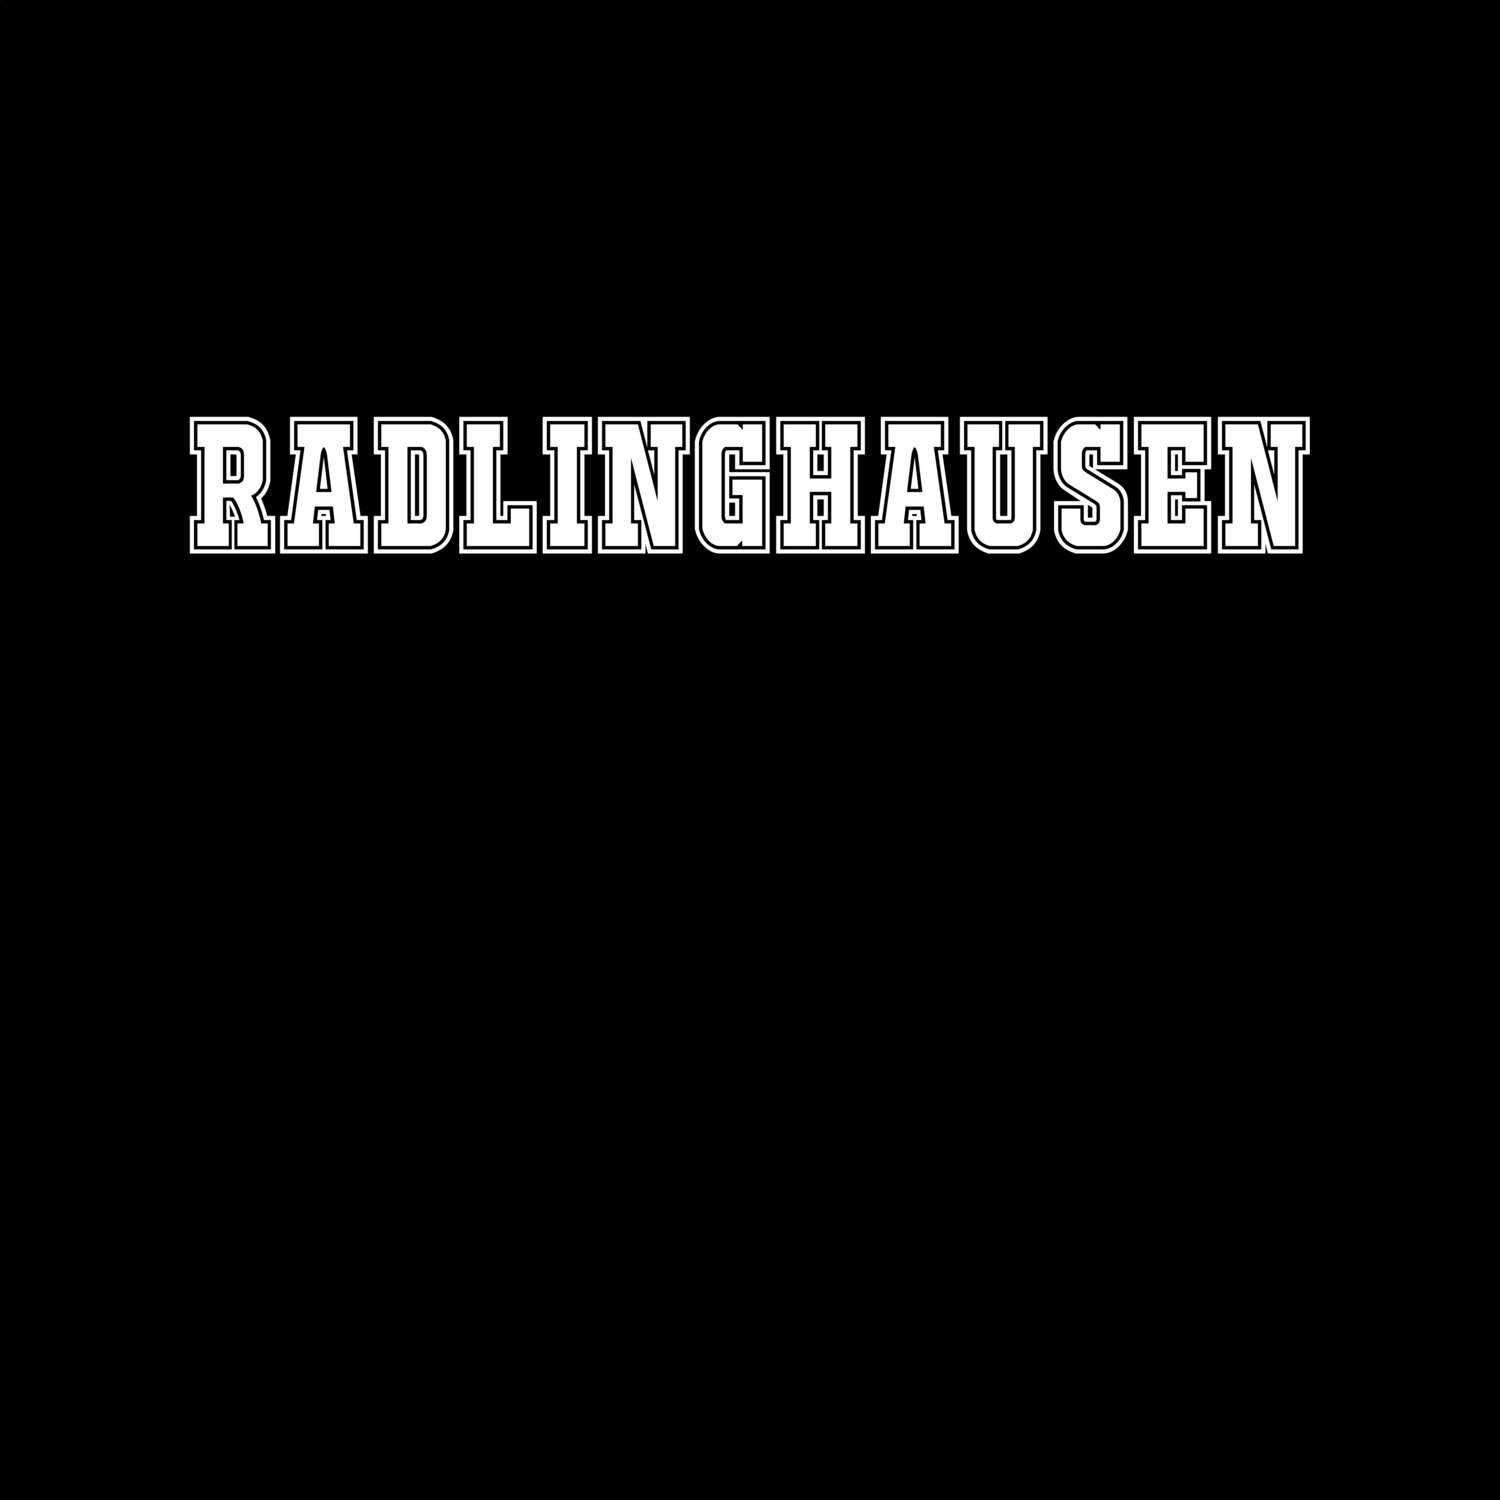 Radlinghausen T-Shirt »Classic«